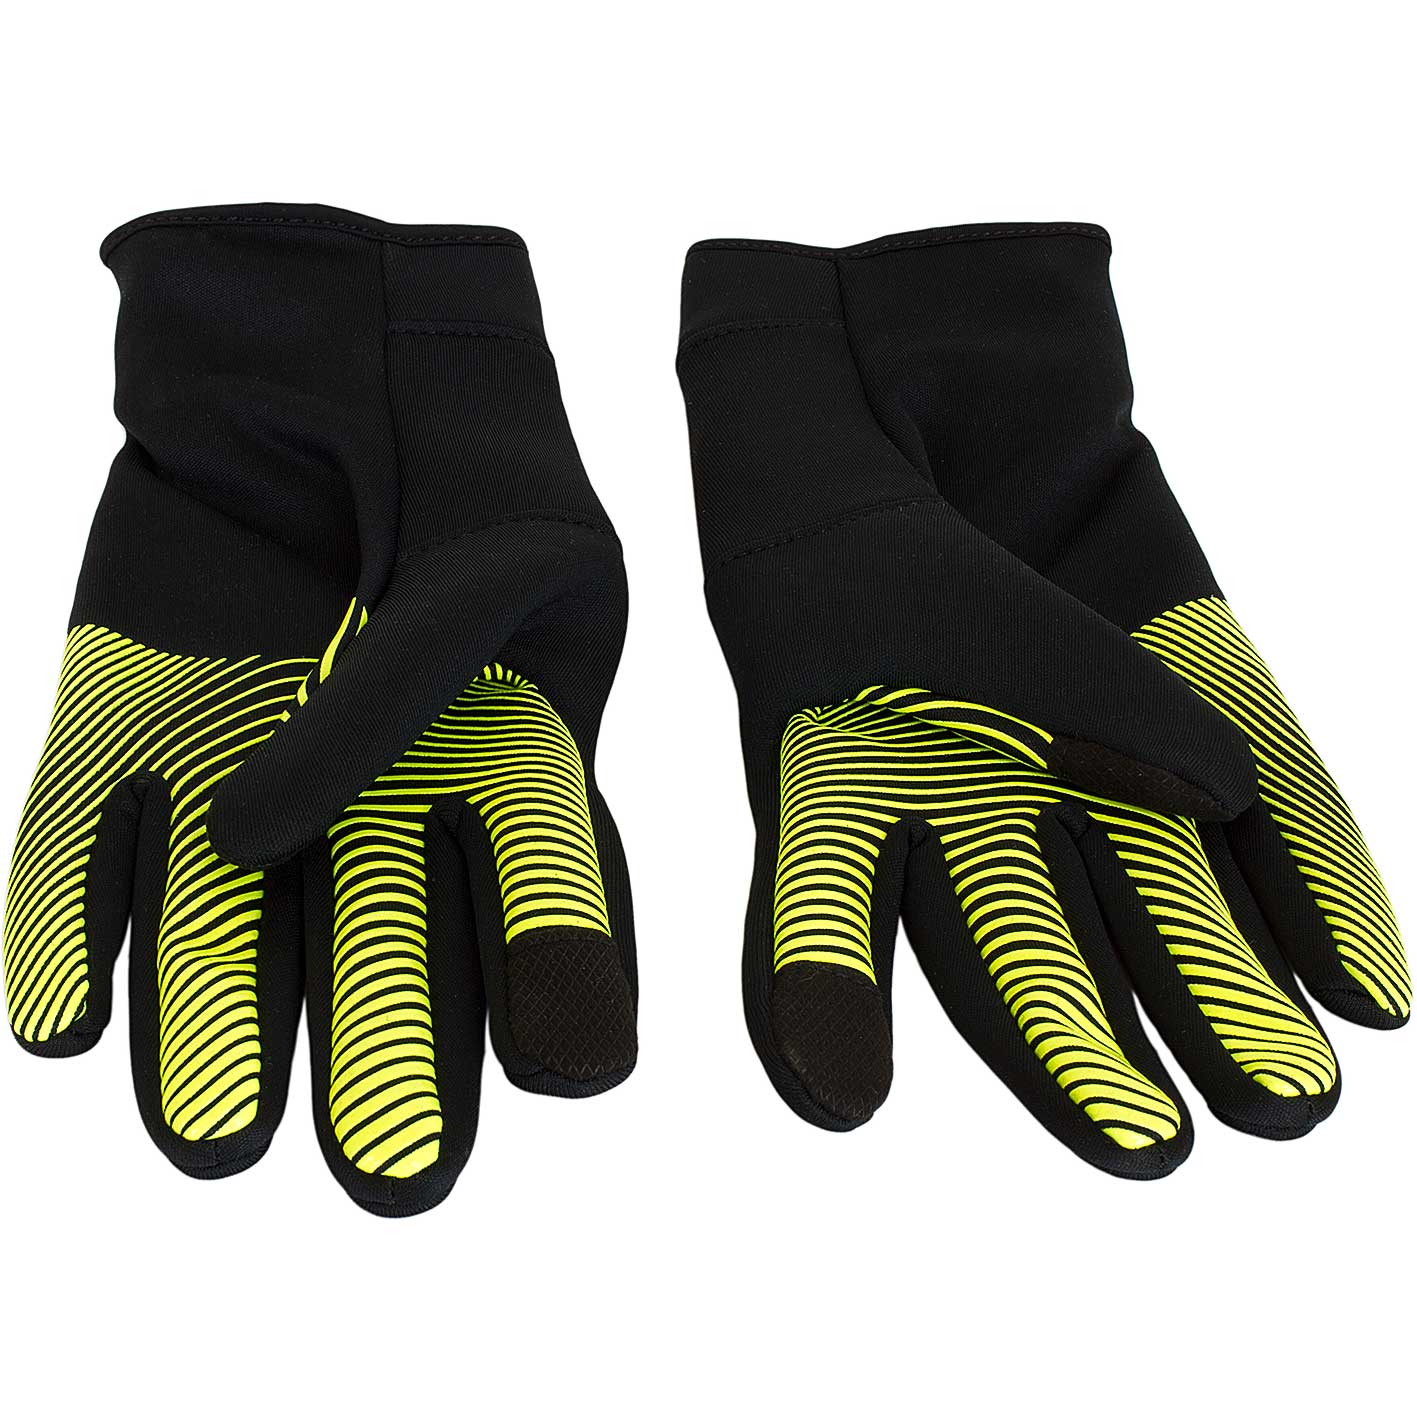 ☆ Nike Handschuhe Therma Sphere schwarz/volt - hier bestellen!